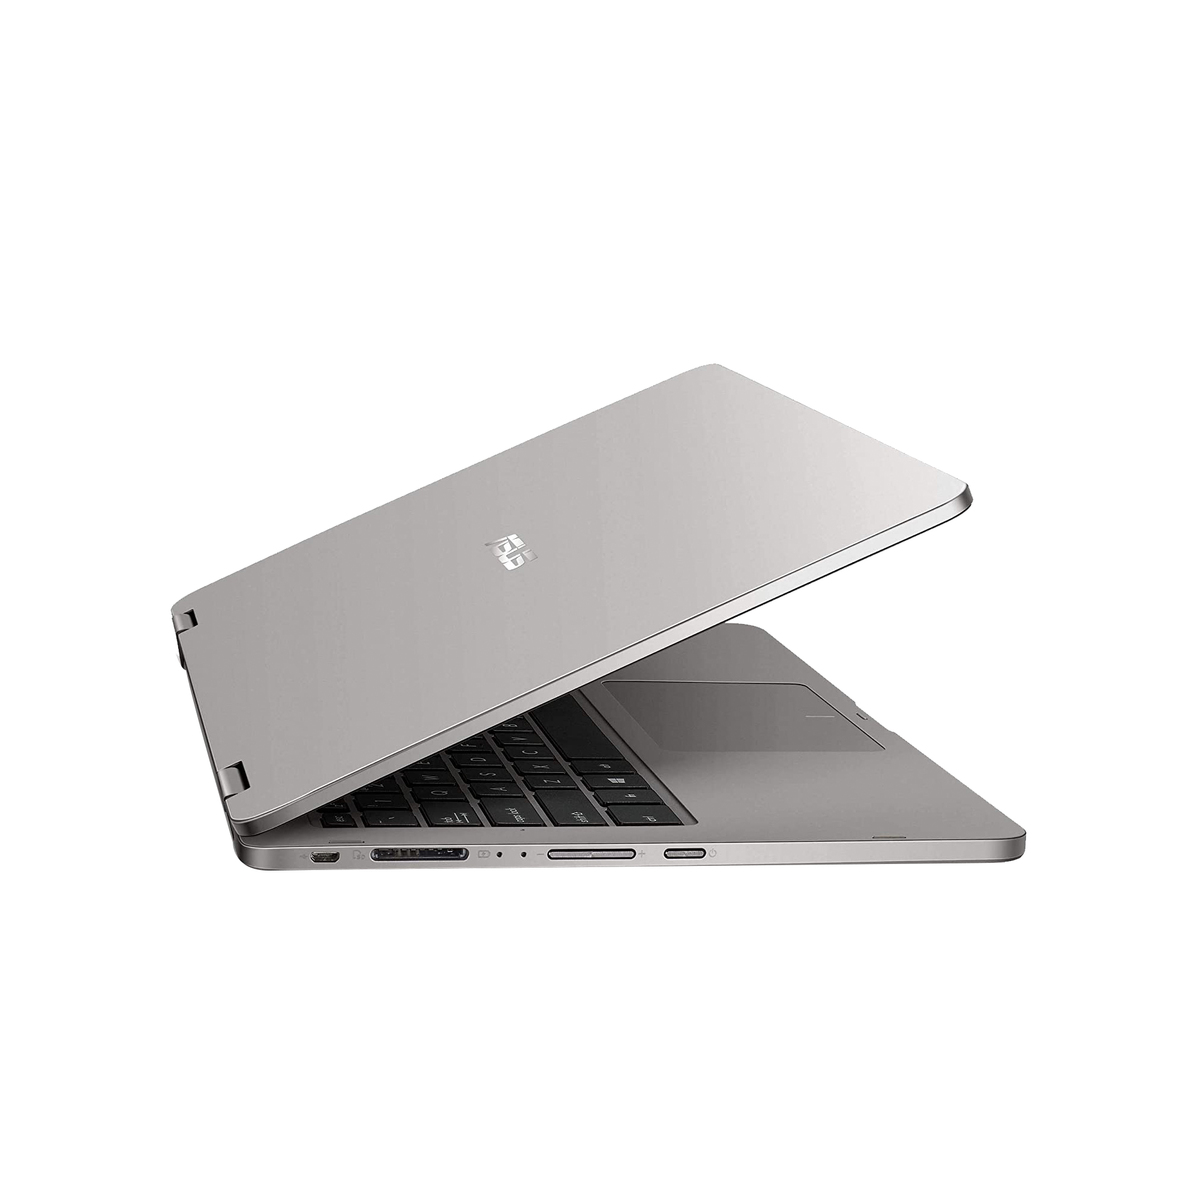 Asus Notebook TP401MA-EC312TS,Intel Celeron,4GB RAM,64GB SSD,Intel UHD Graphics,14.0" Touch,Windows 10,Grey